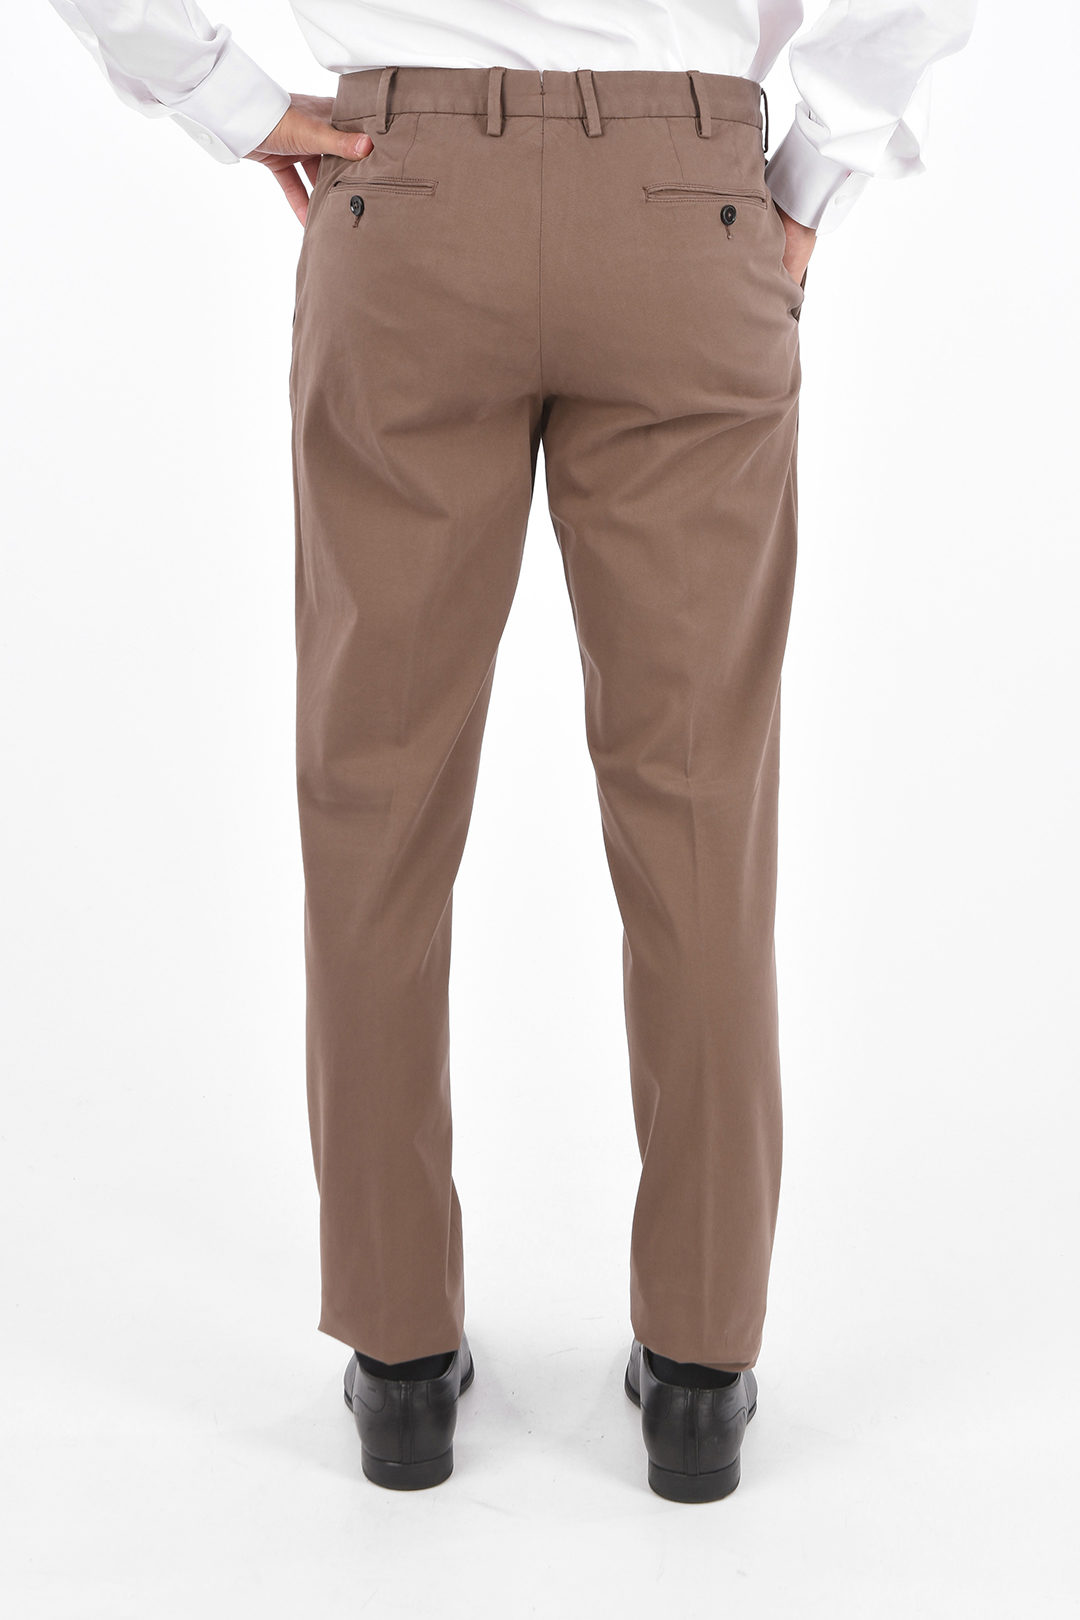 Buy Michael Kors men heather belt loops elevated pants light grey Online |  Brands For Less